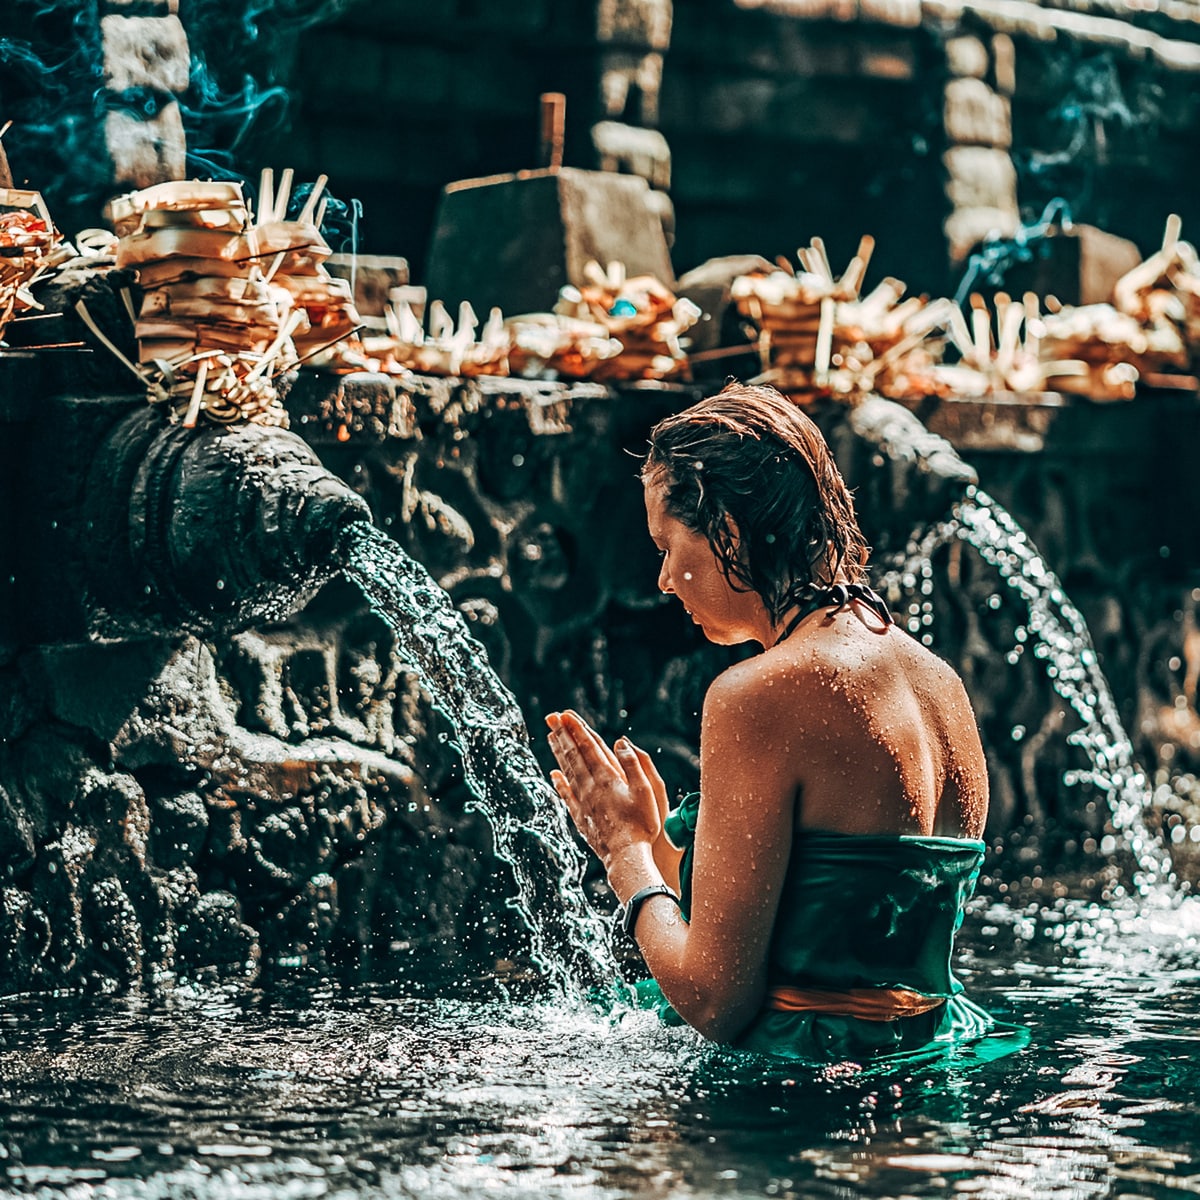 Experience Tirta Empul: Bali's Sacred Water Temple